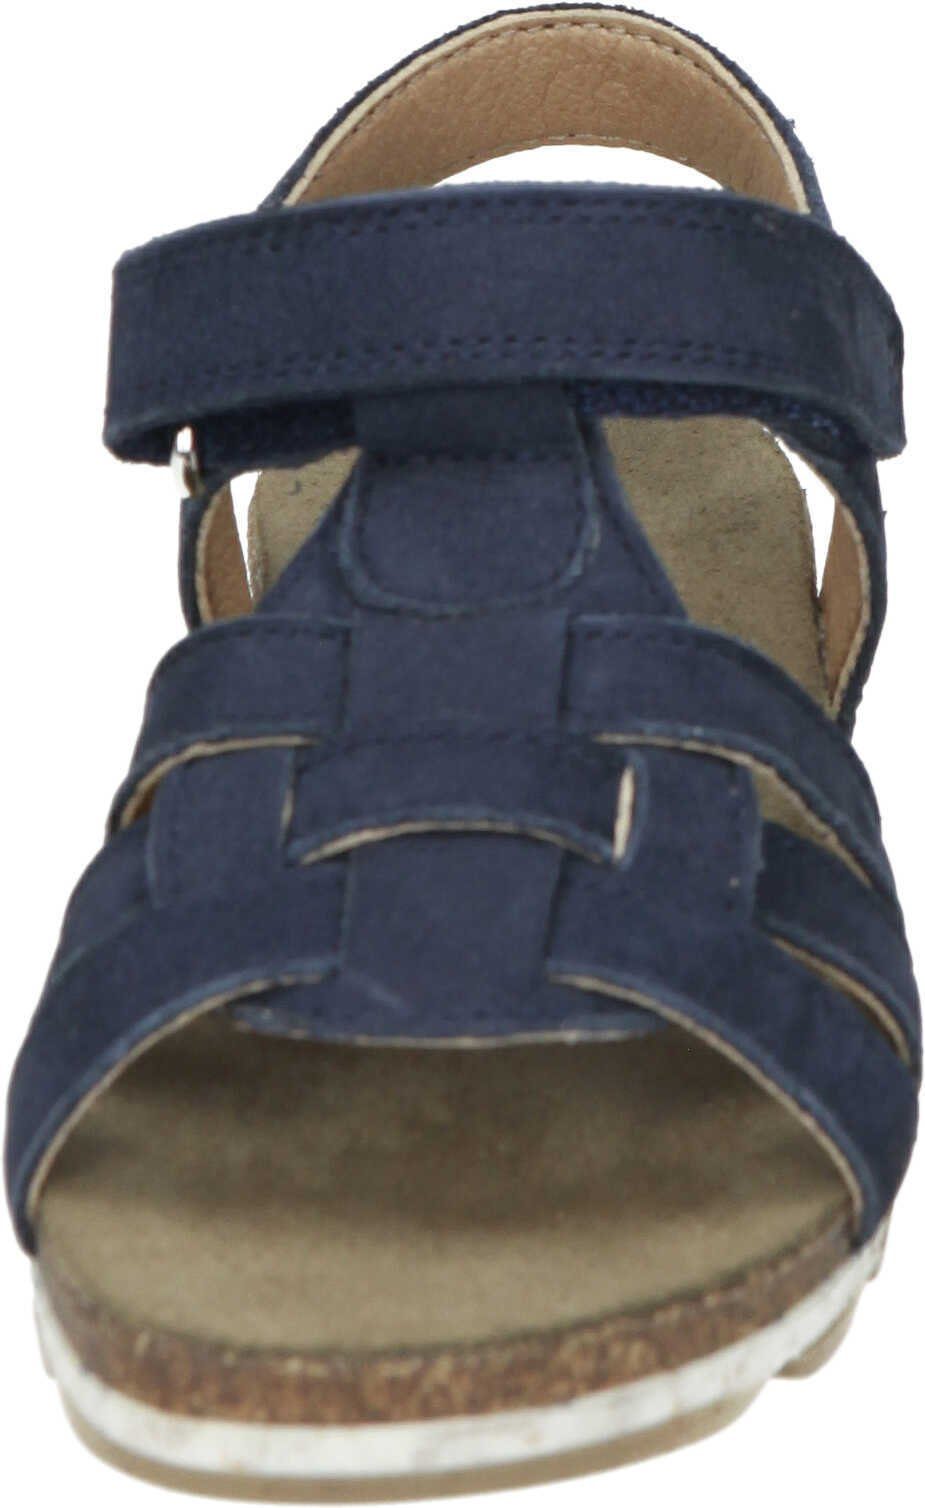 Vado Sandaletten Sandalette blau Nubukleder aus